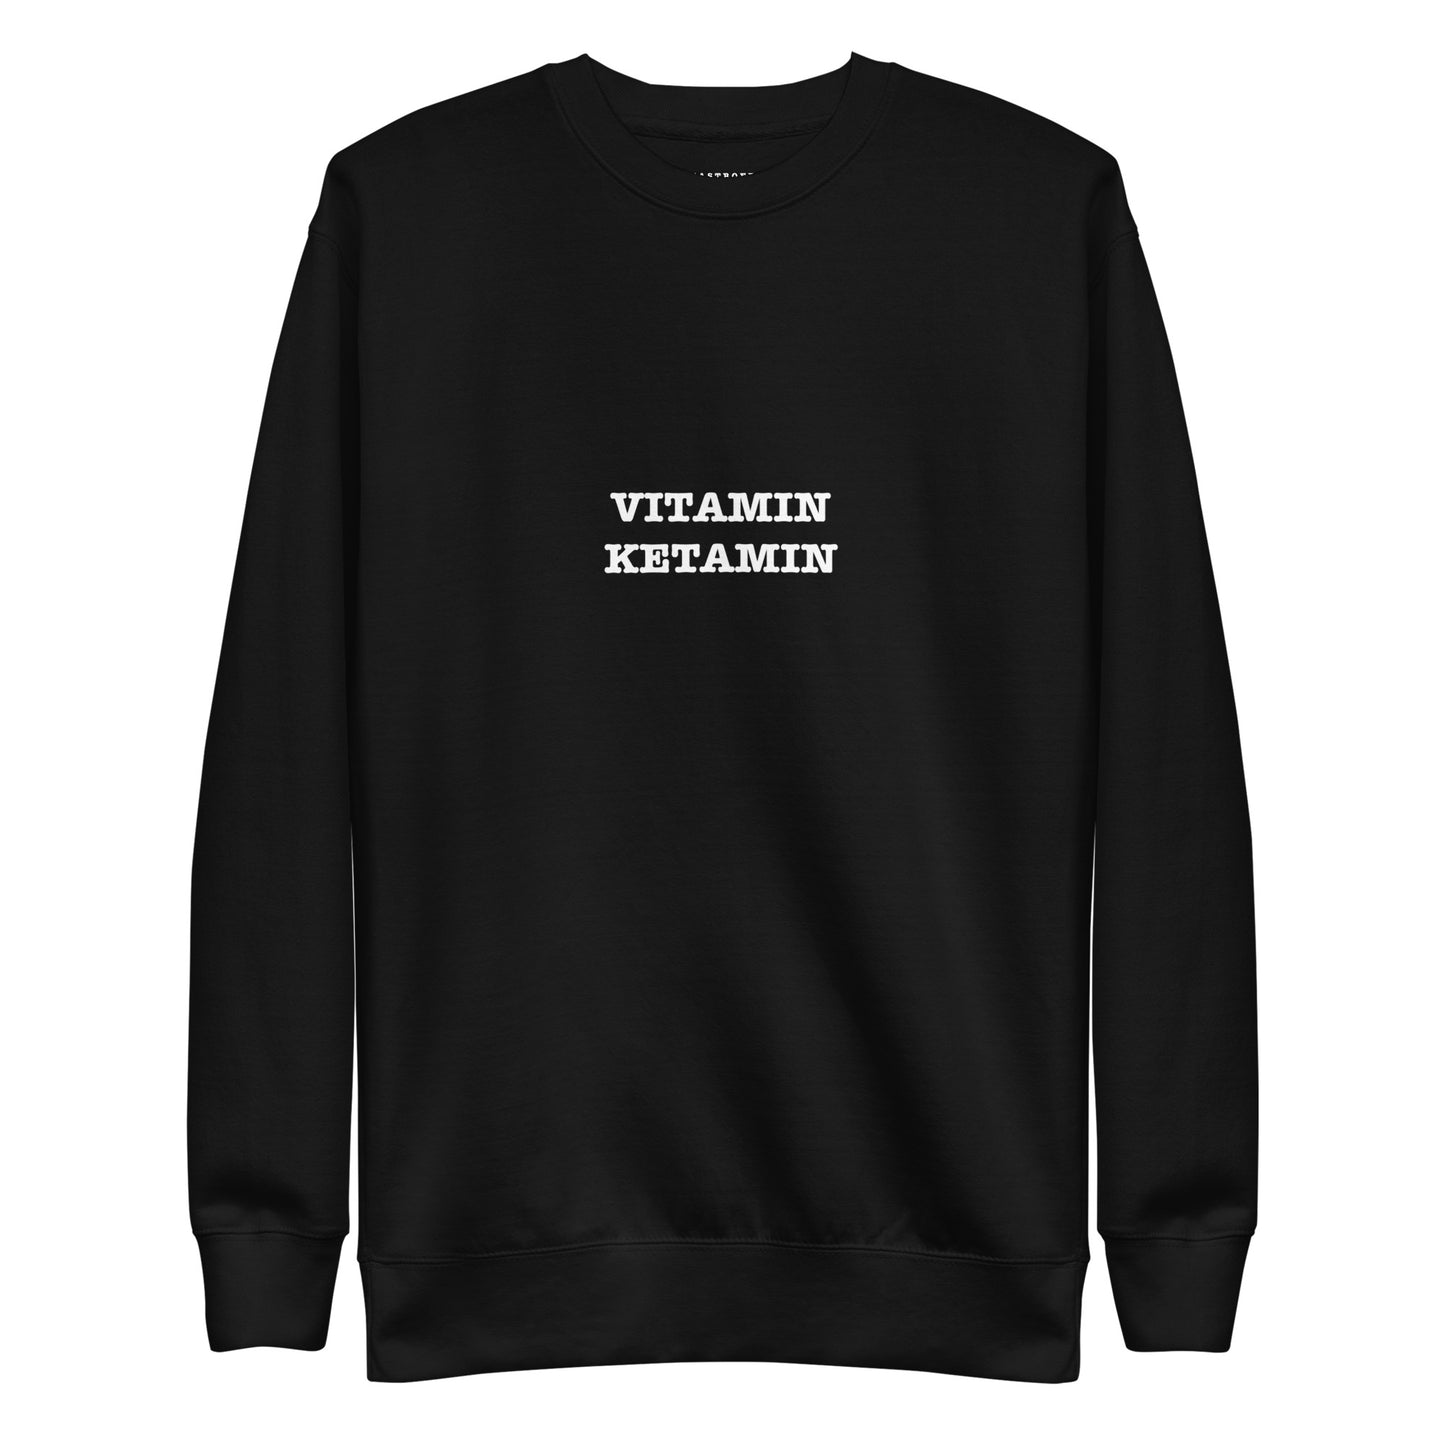 VITAMIN KETAMIN Katastrofffe Unisex Premium Sweatshirt